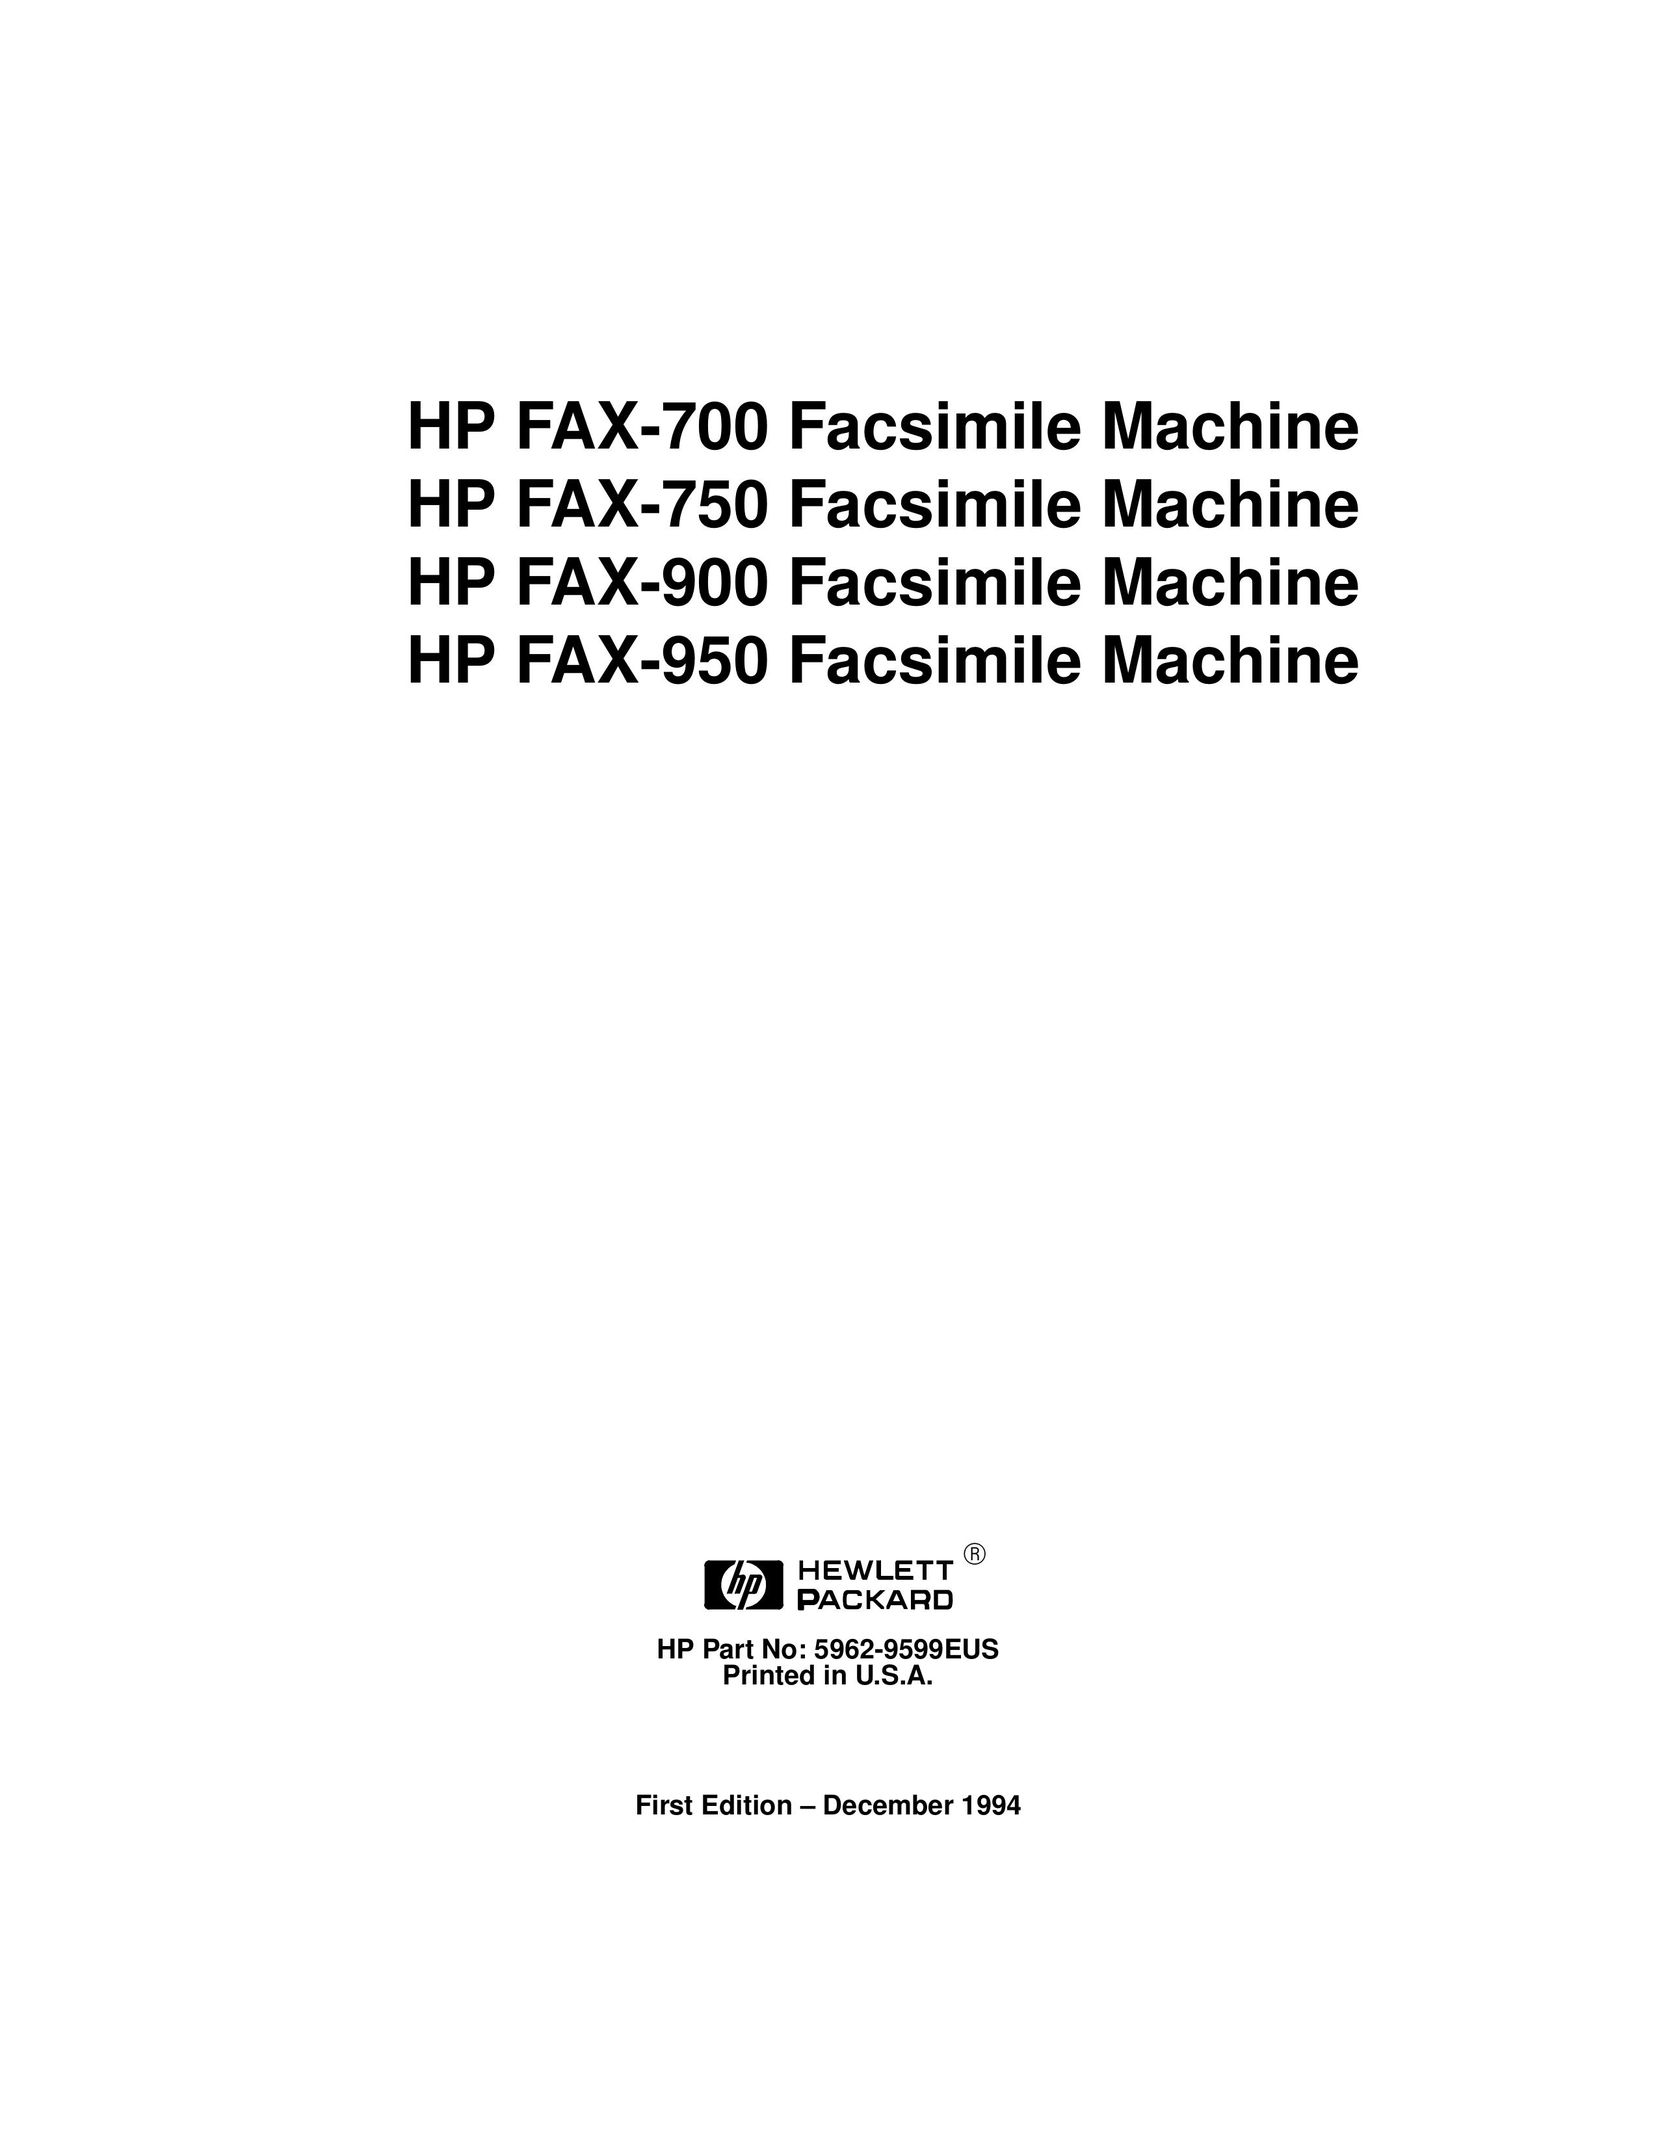 HP (Hewlett-Packard) HP FAX-700 Fax Machine User Manual